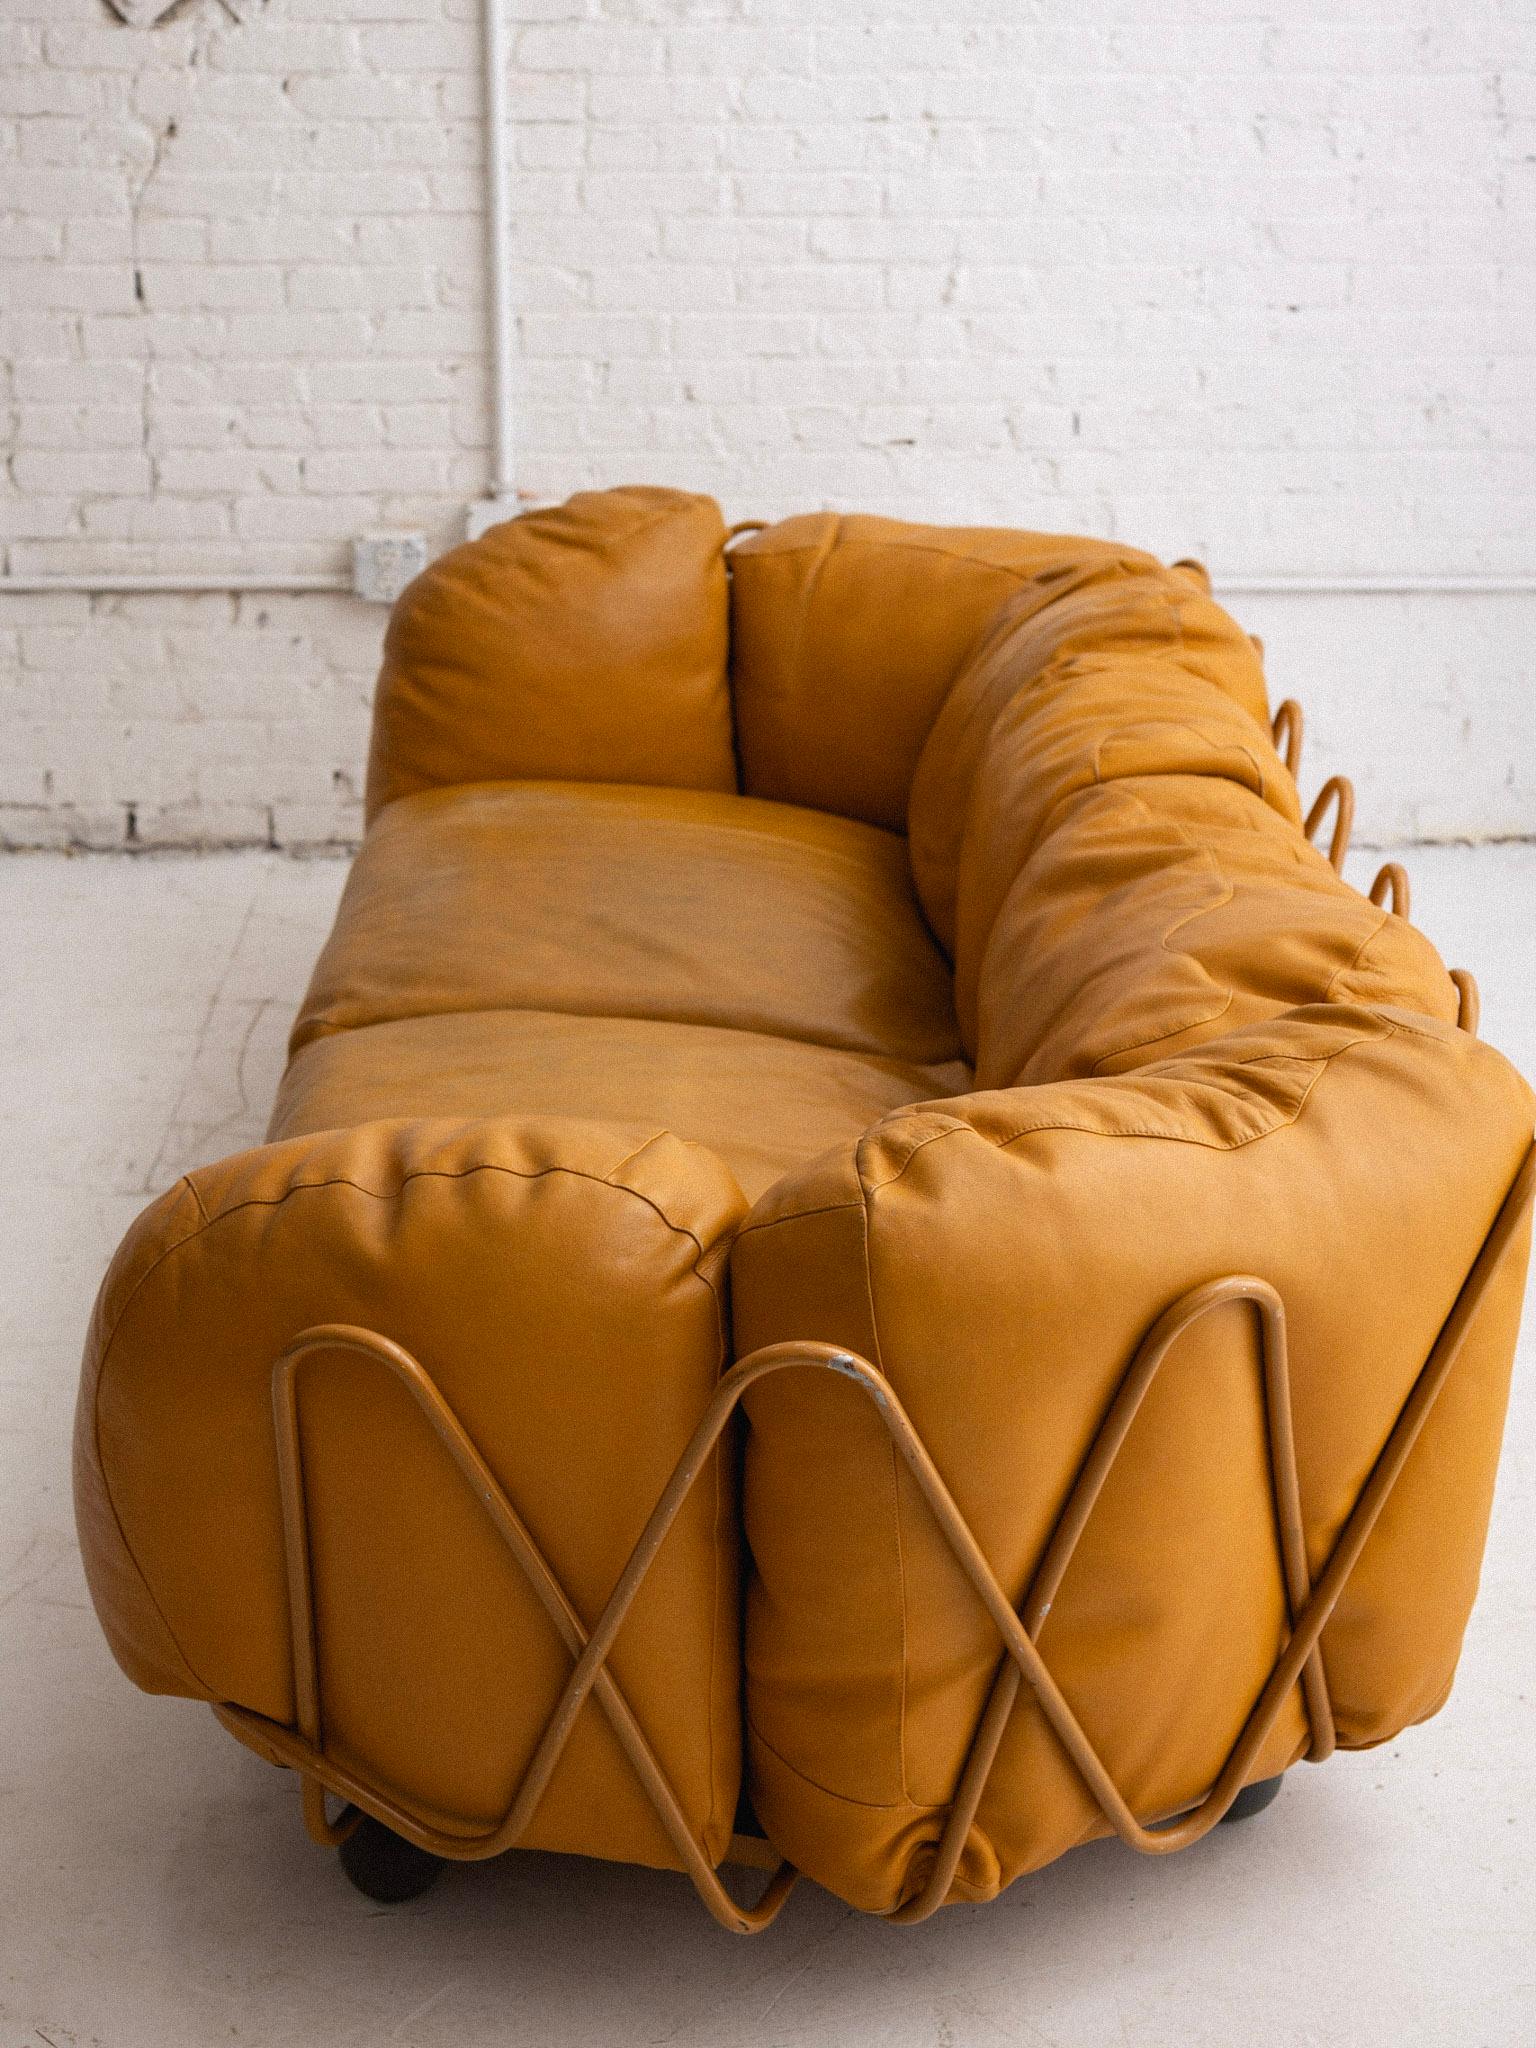 'Corbeille' Leather Sofa by Francesco Binfare for Edra 1